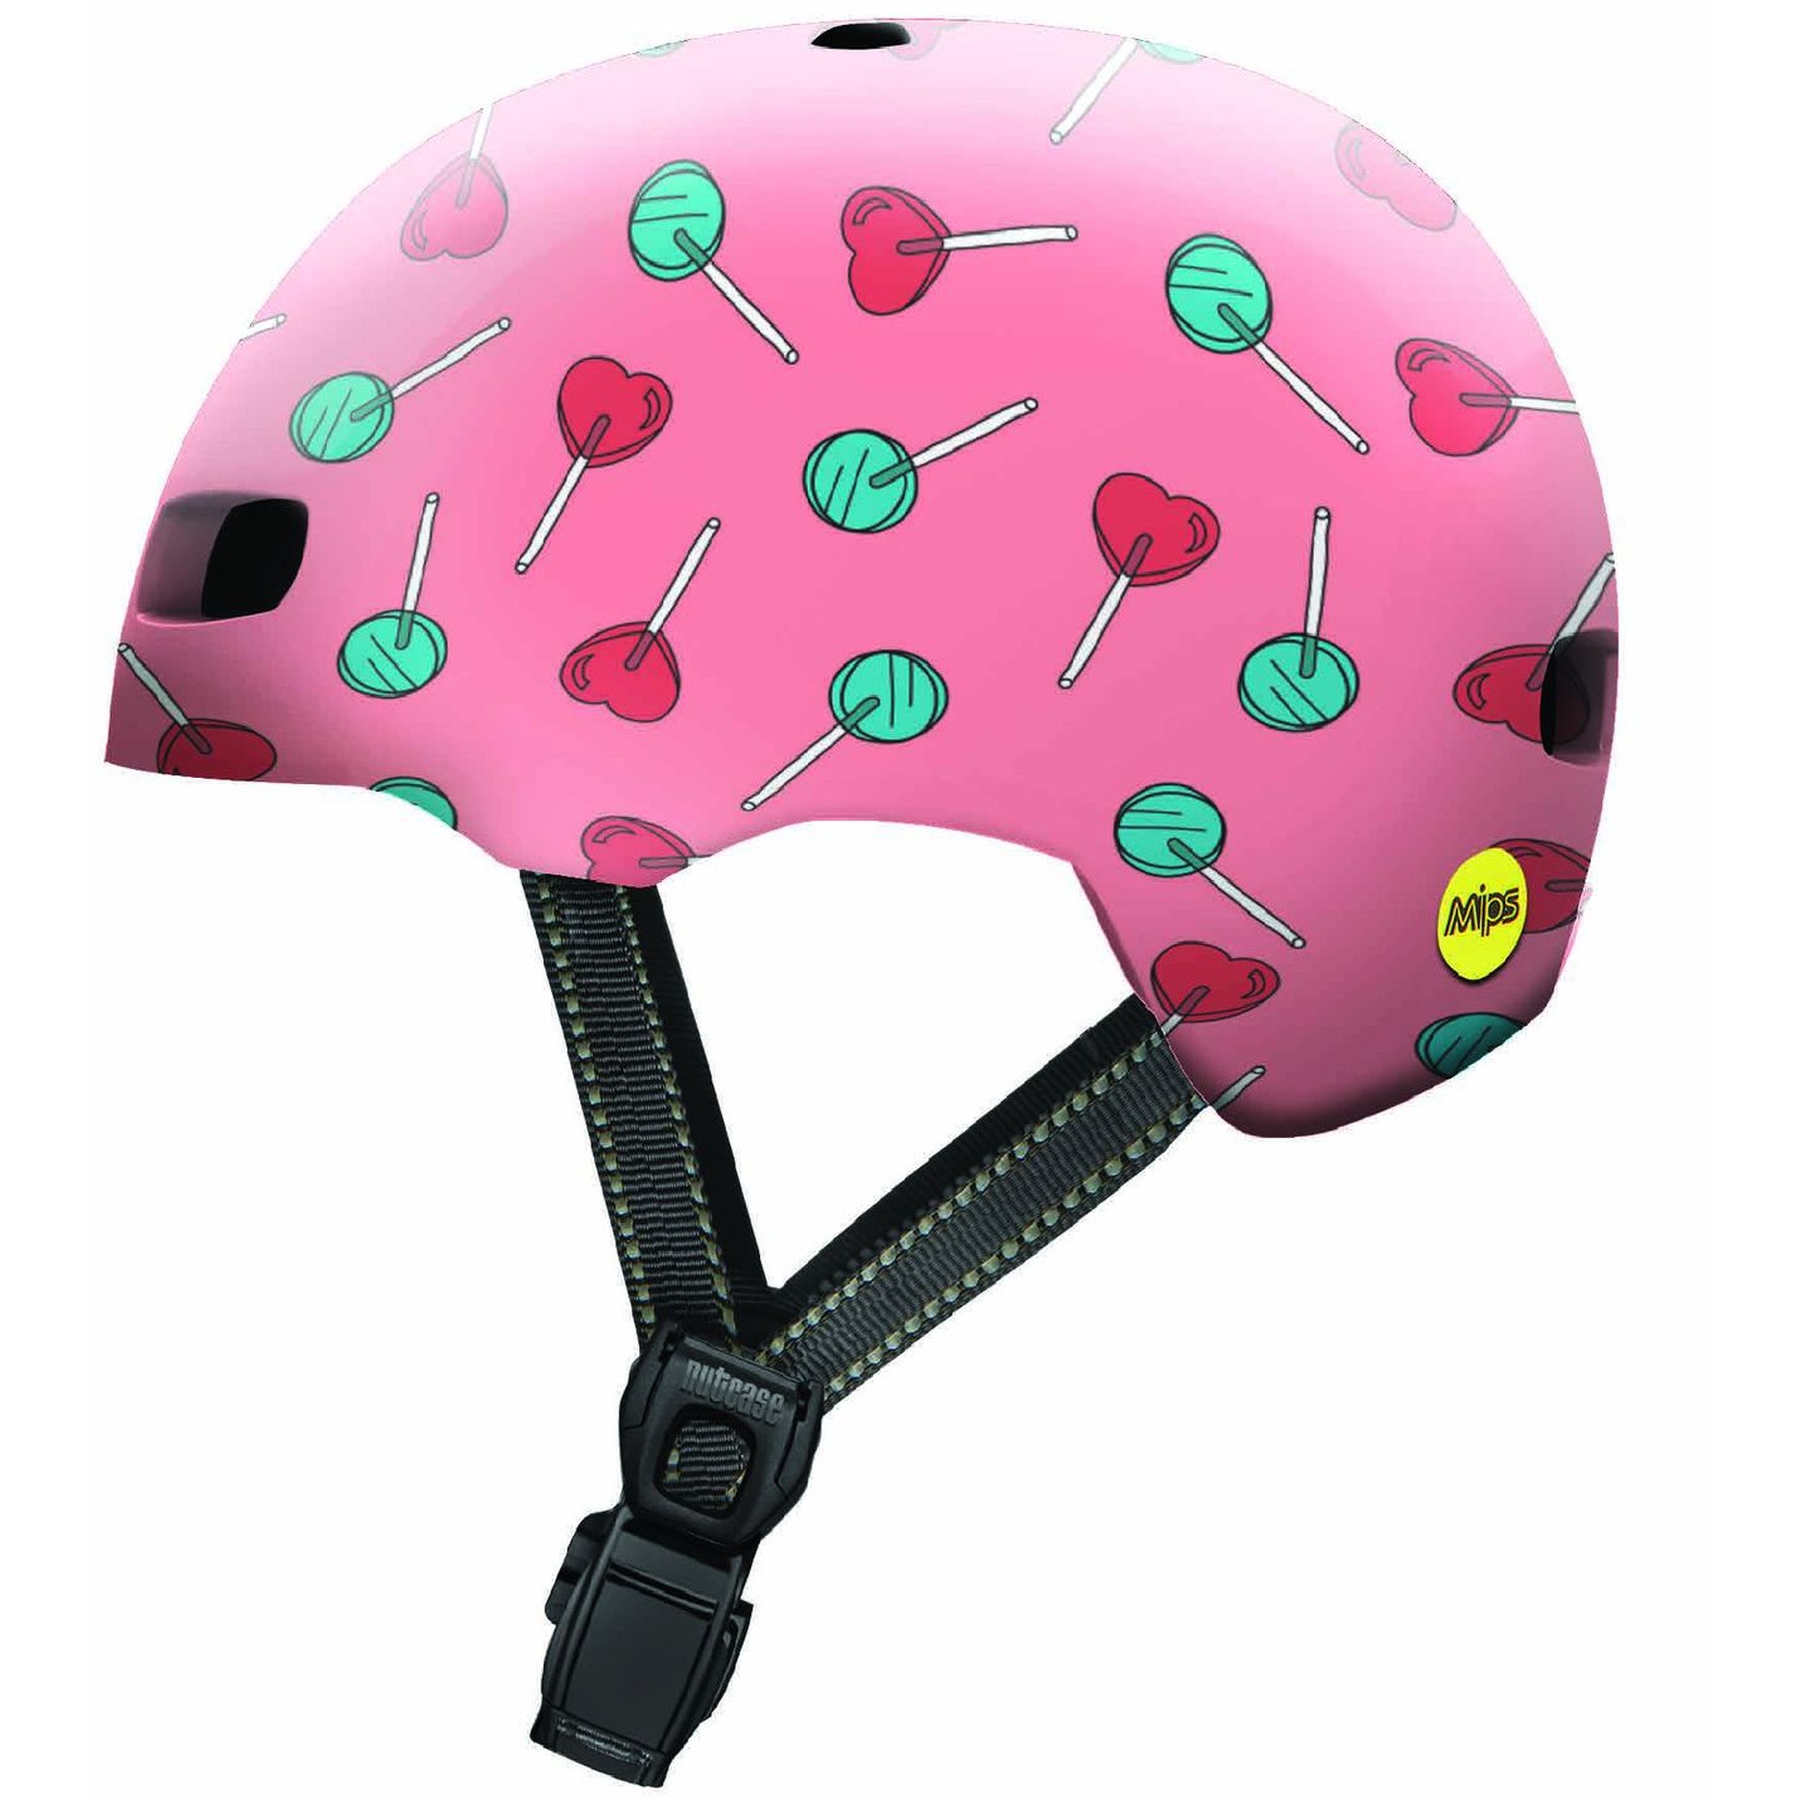 Productfoto van Nutcase Baby Nutty MIPS Baby Helmet - Sucker Punch Gloss